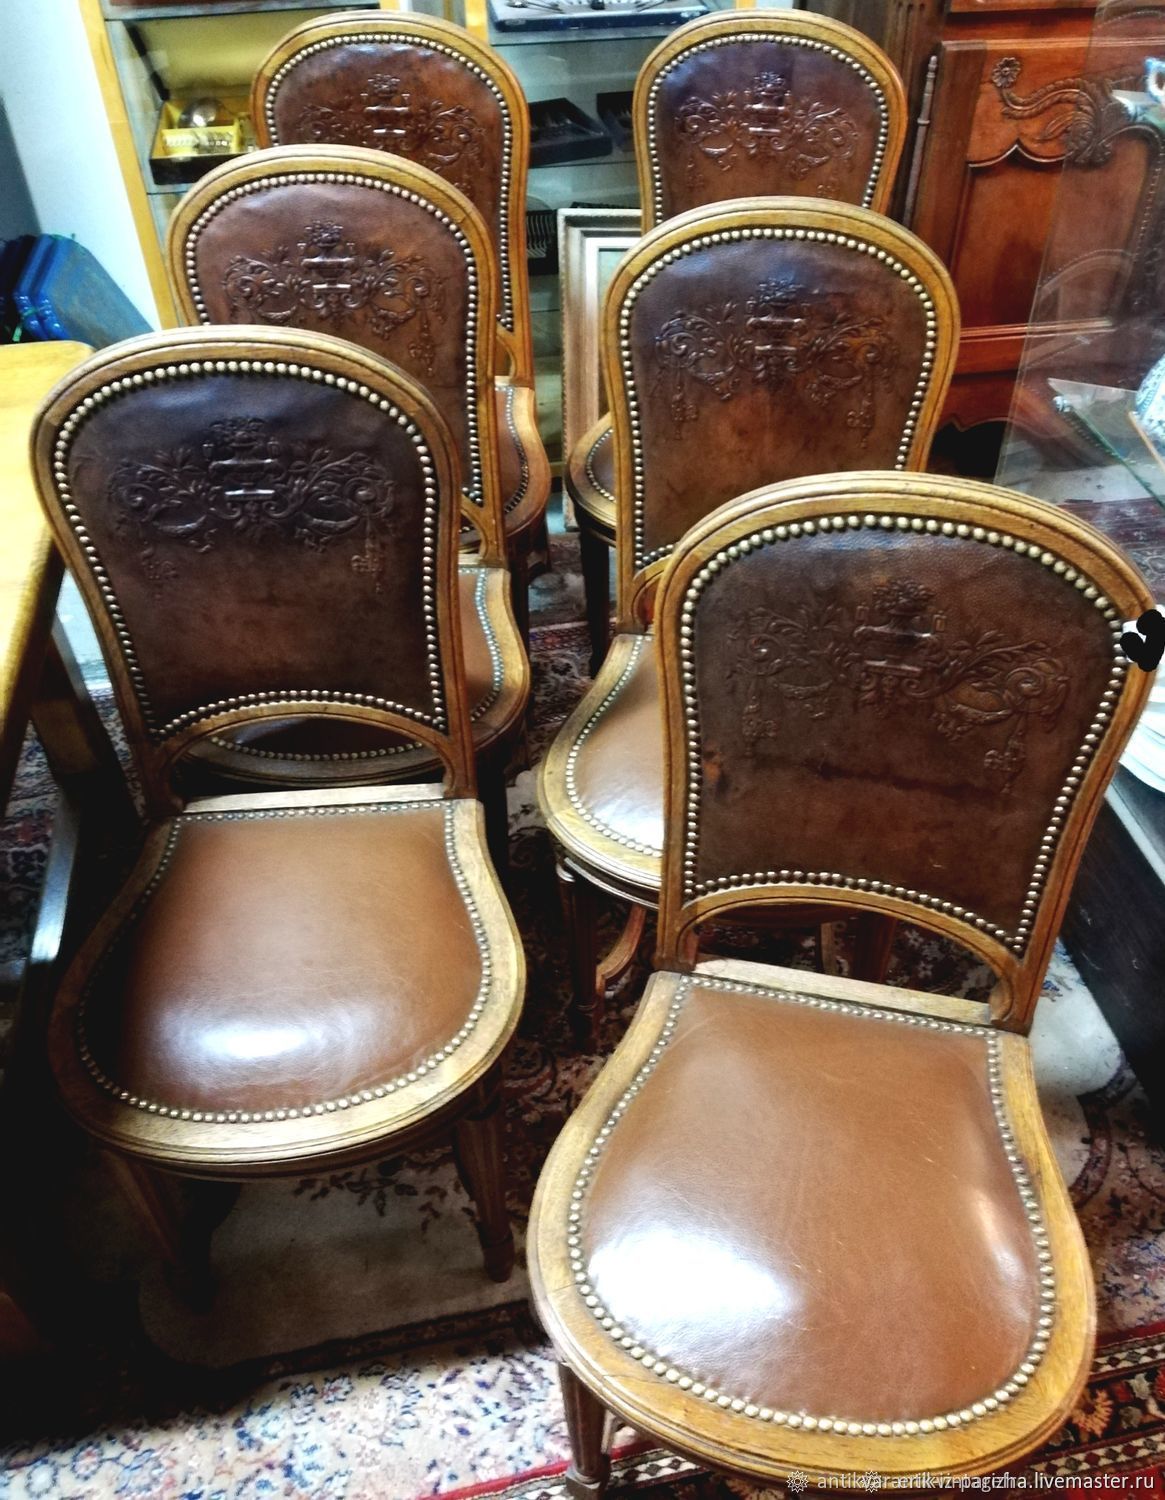 Vintage Antique Furniture Chairs Magnifique Leather Wood French Kupit Na Yarmarke Masterov Kzmb2com Predmety Interera Vintazhnye Orleans